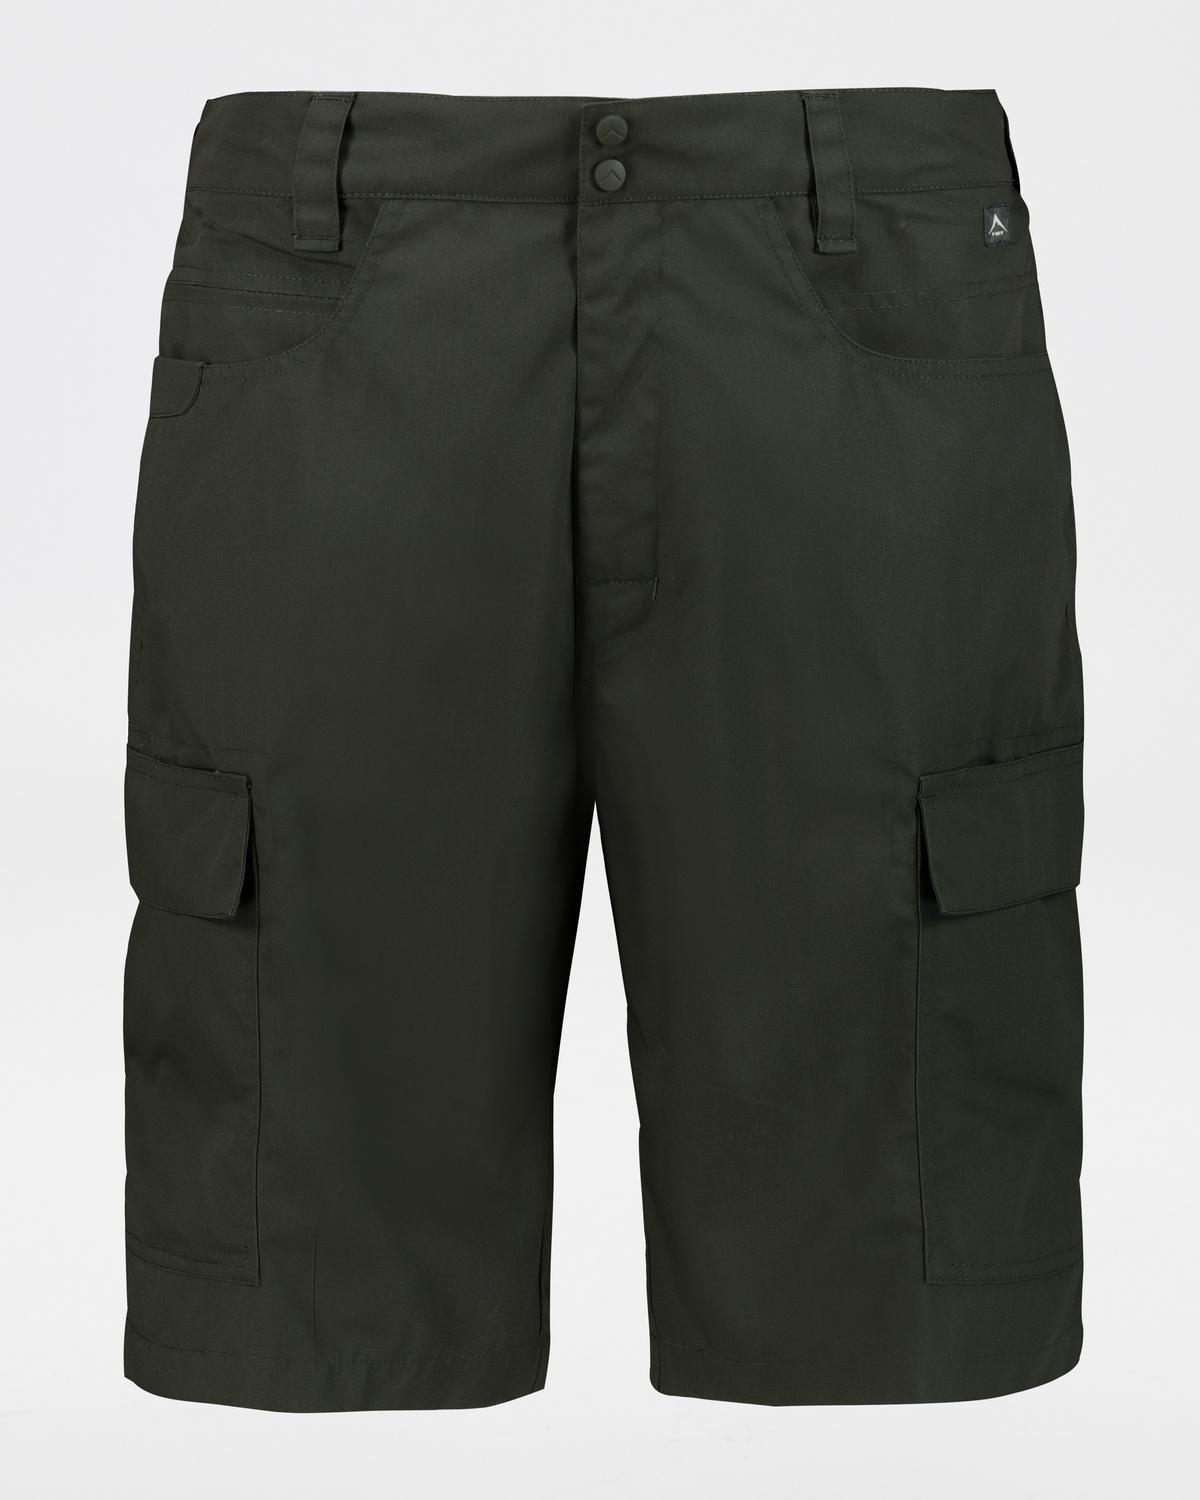 K-Way Expedition Series Men's Tech Cargo Shorts -  Dark Olive